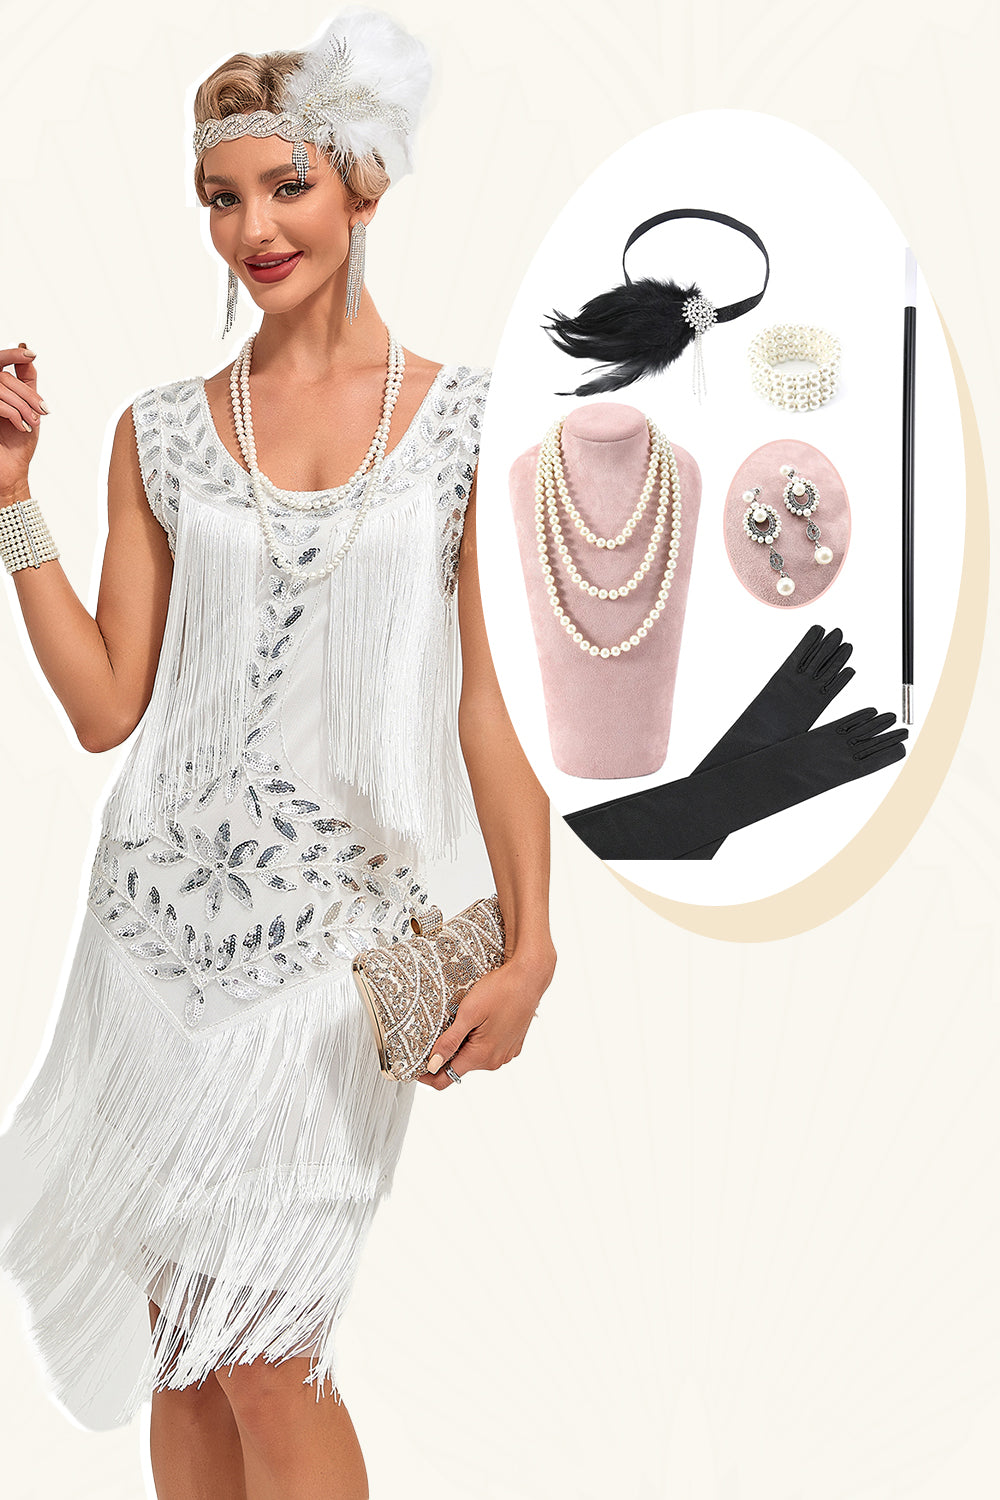 Zapaka Women's Roaring 20s Flapper Fancy Dress Spaghetti Straps White Gatsby Fringed Dress, White / M